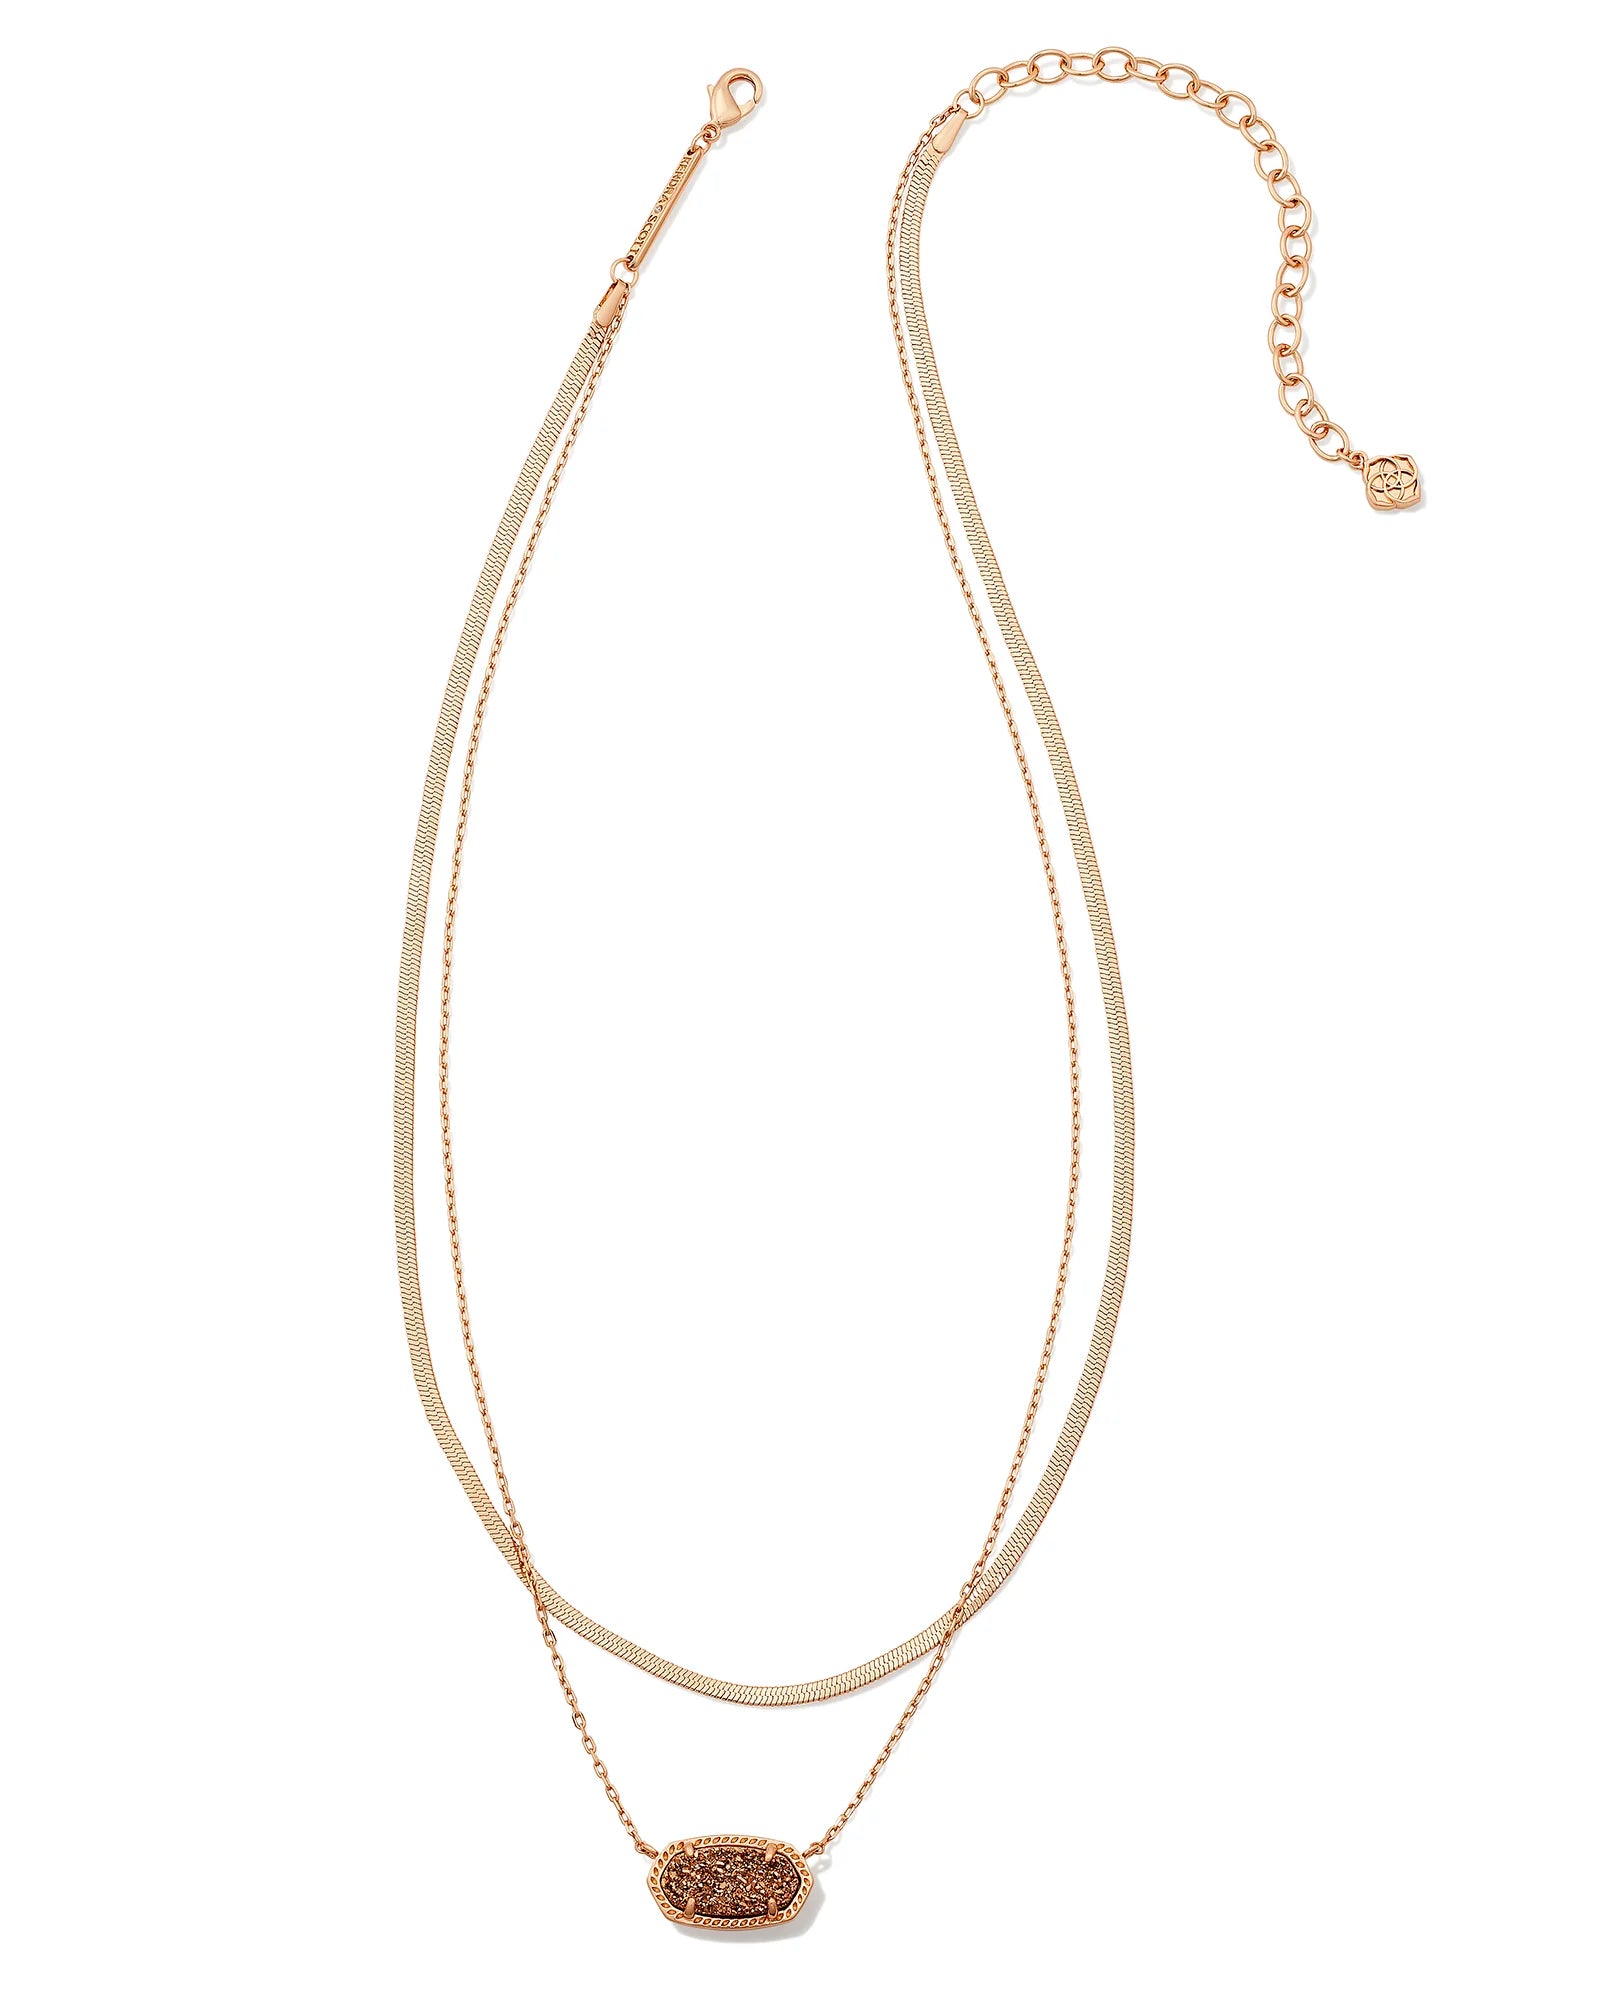 Kendra Scott | Elisa Herringbone Rose Gold Multi Strand Necklace in Rose Gold Drusy - Giddy Up Glamour Boutique